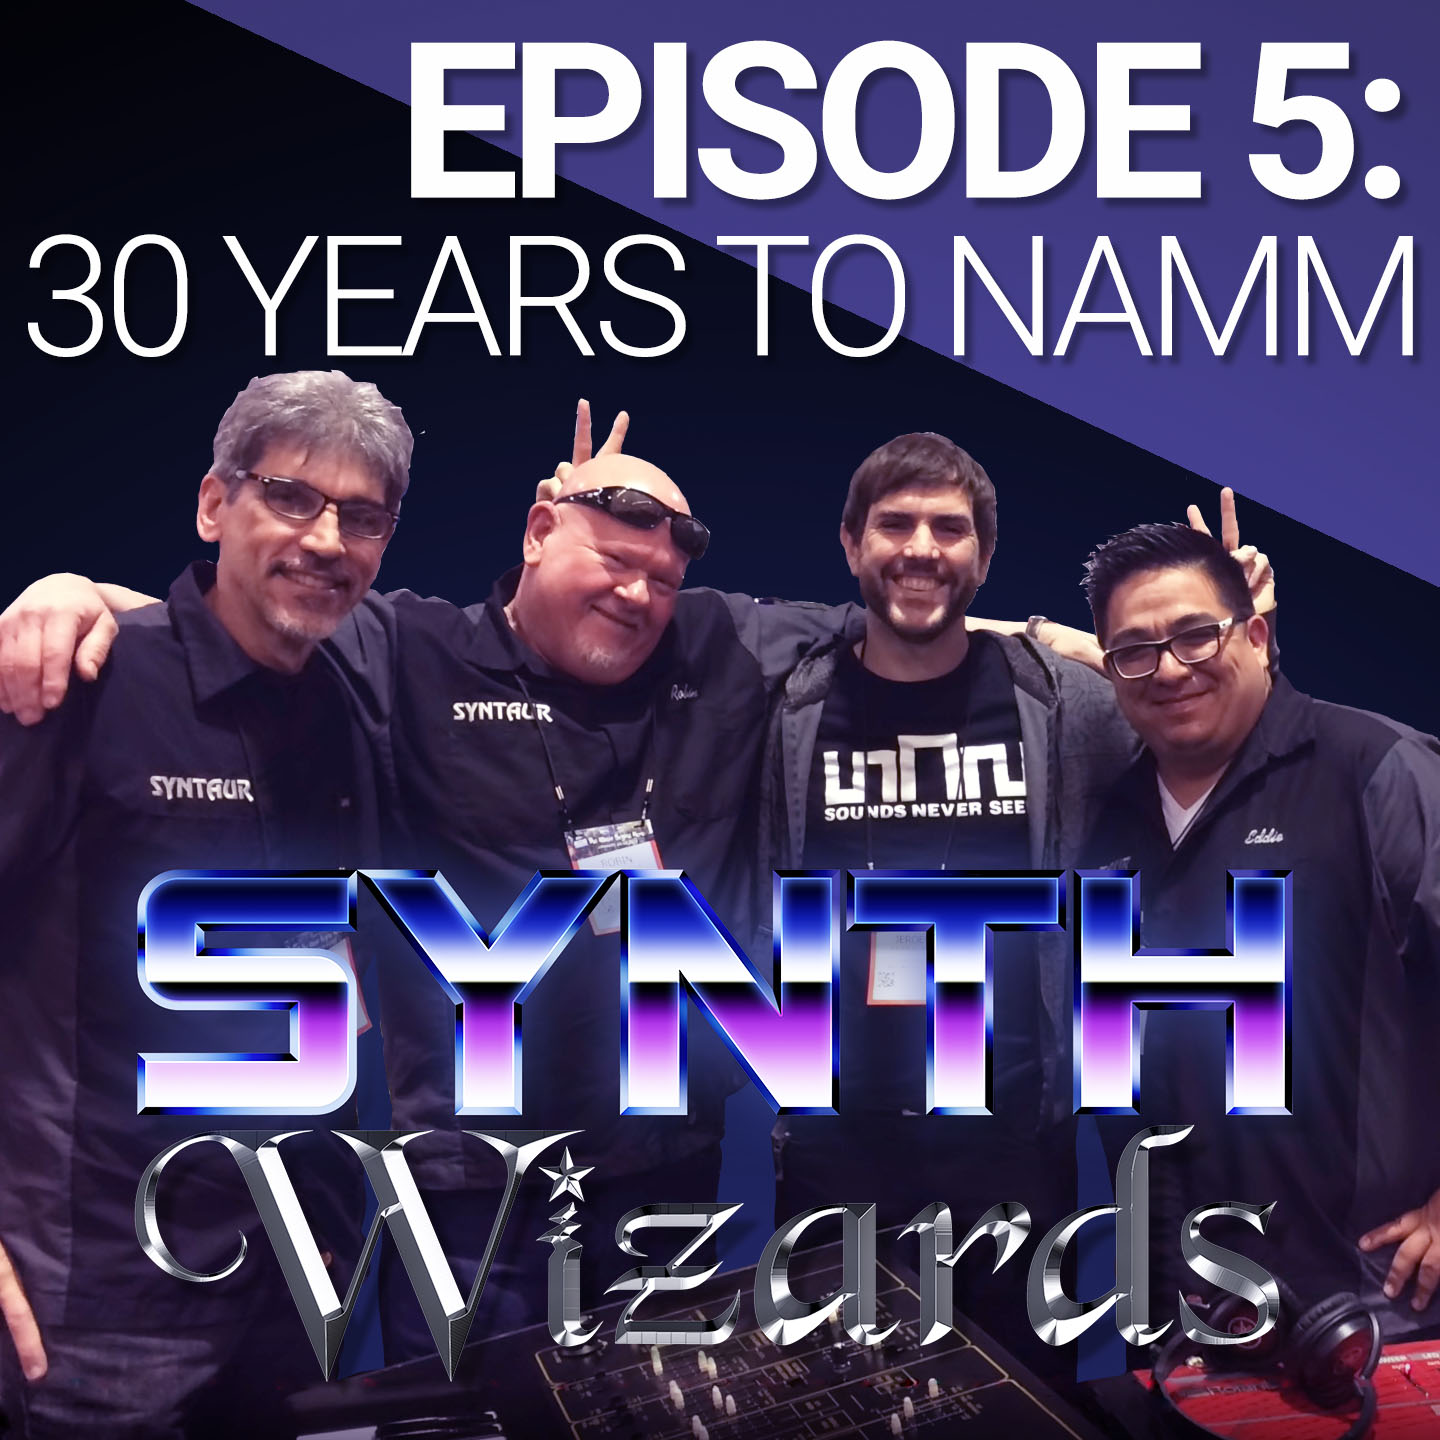 Sam, Robin, Jeroen, and Eddie at the Syntaur NAMM booth.